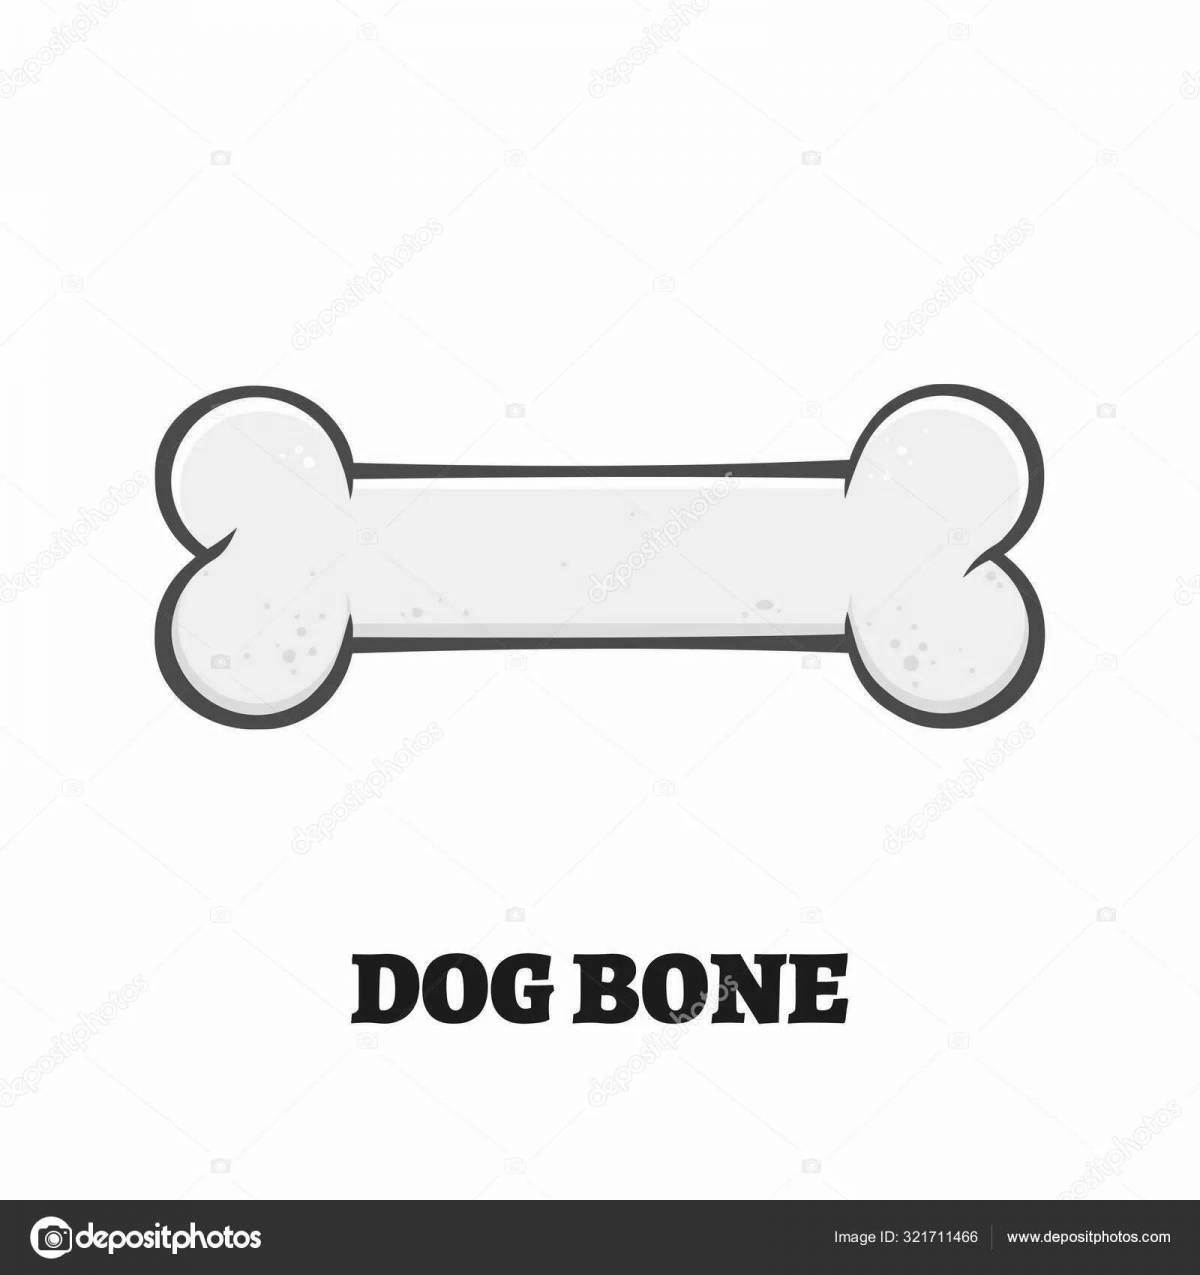 Fabulous dog bones coloring page